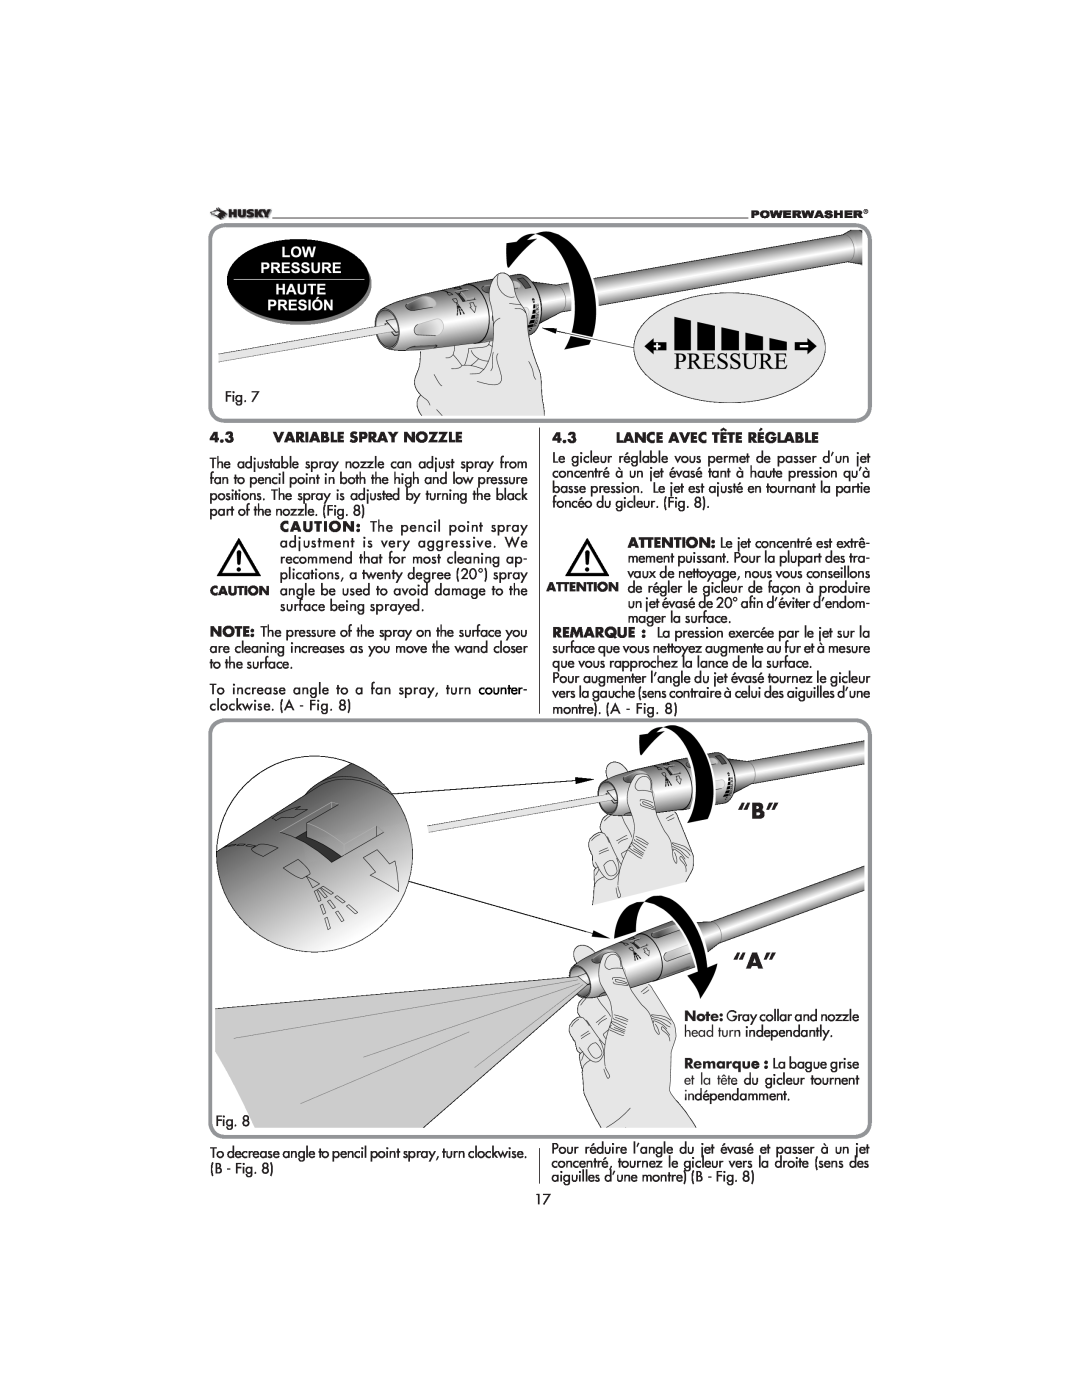 Husky 1800 CA manual “B” “A”, Variable Spray Nozzle, Lance Avec Tête Réglable 